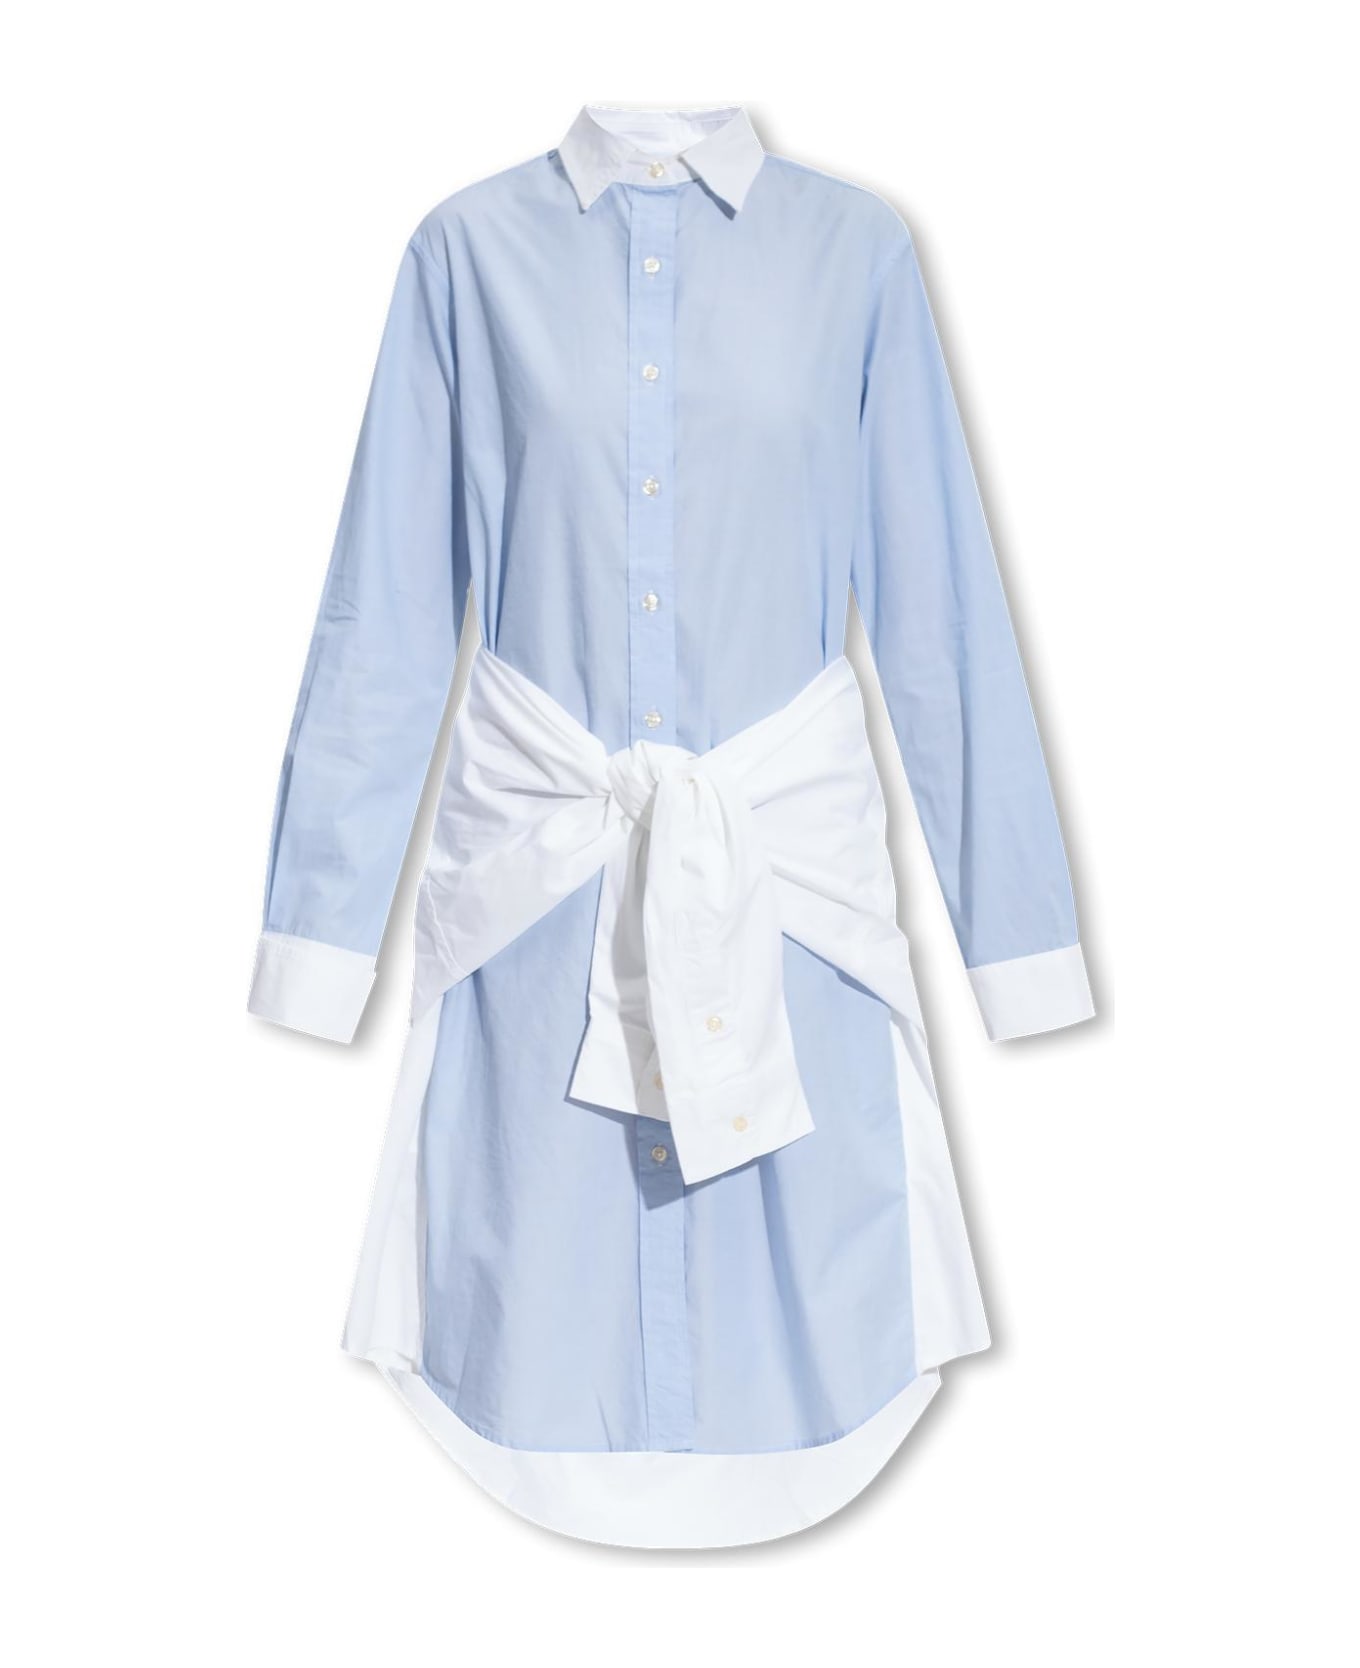 R13 Shirt Dress - BLUE/WHITE